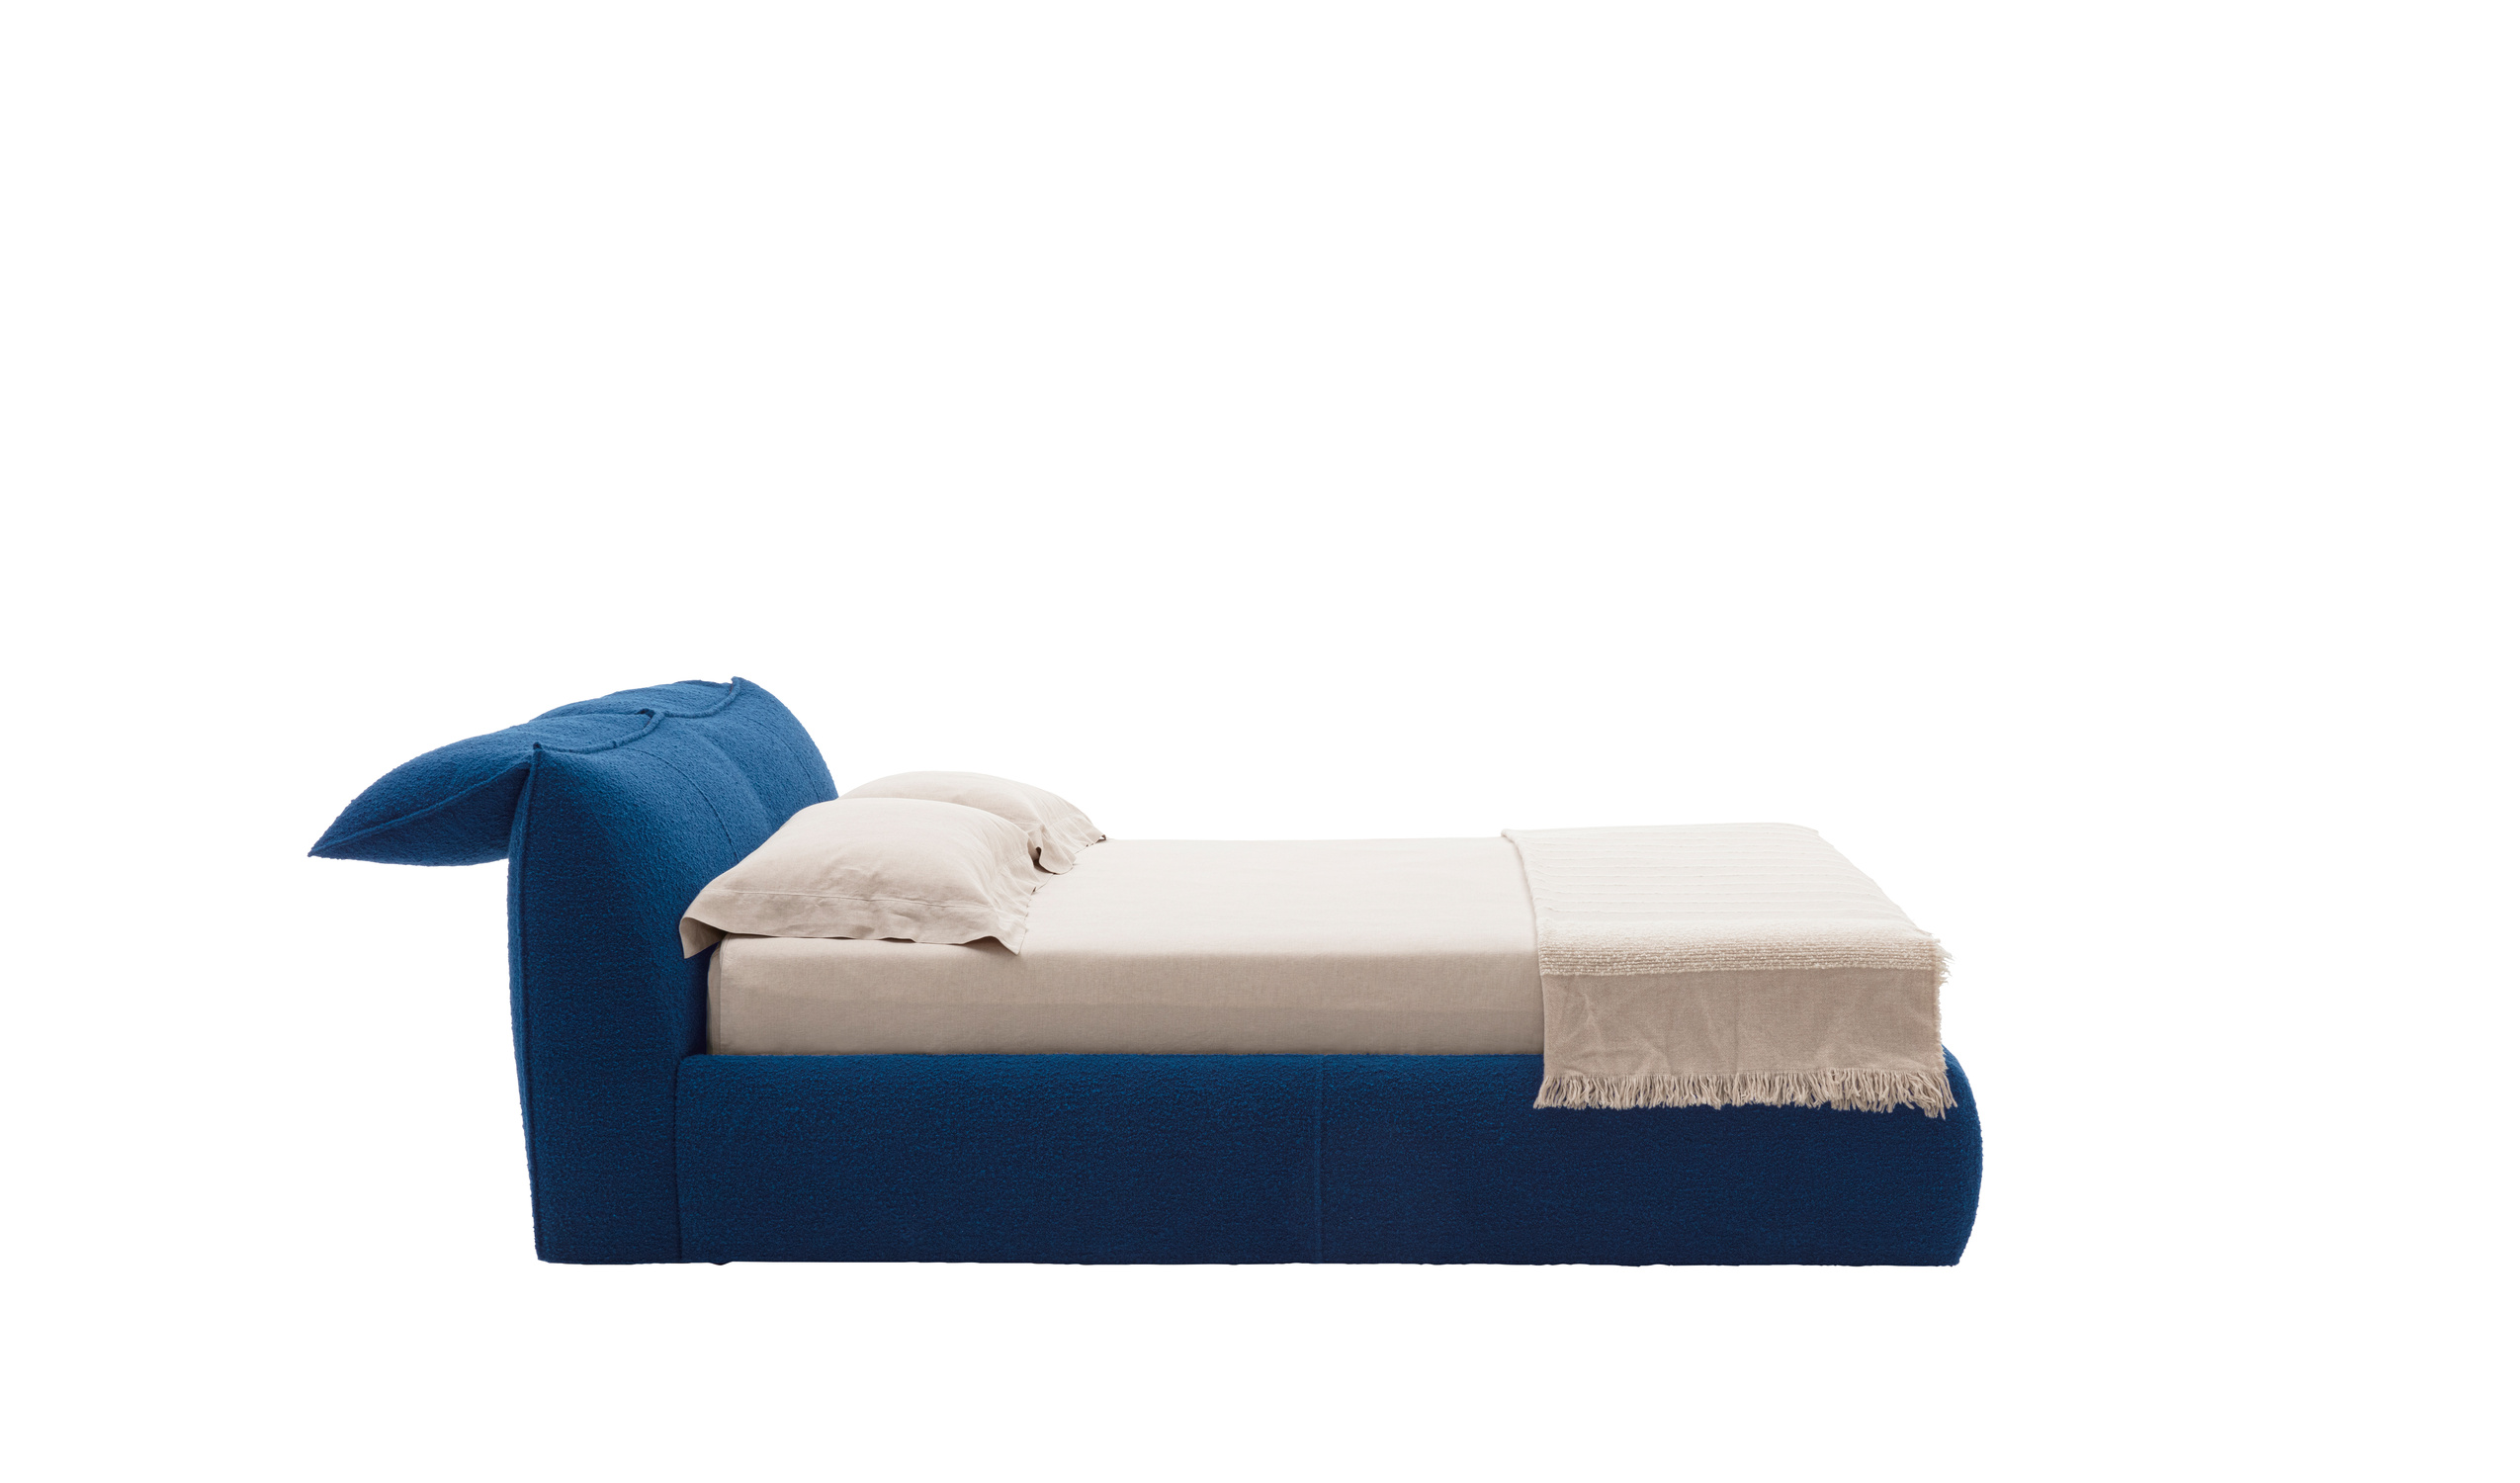 Designer Italian modern beds - Bamboletto Beds 3